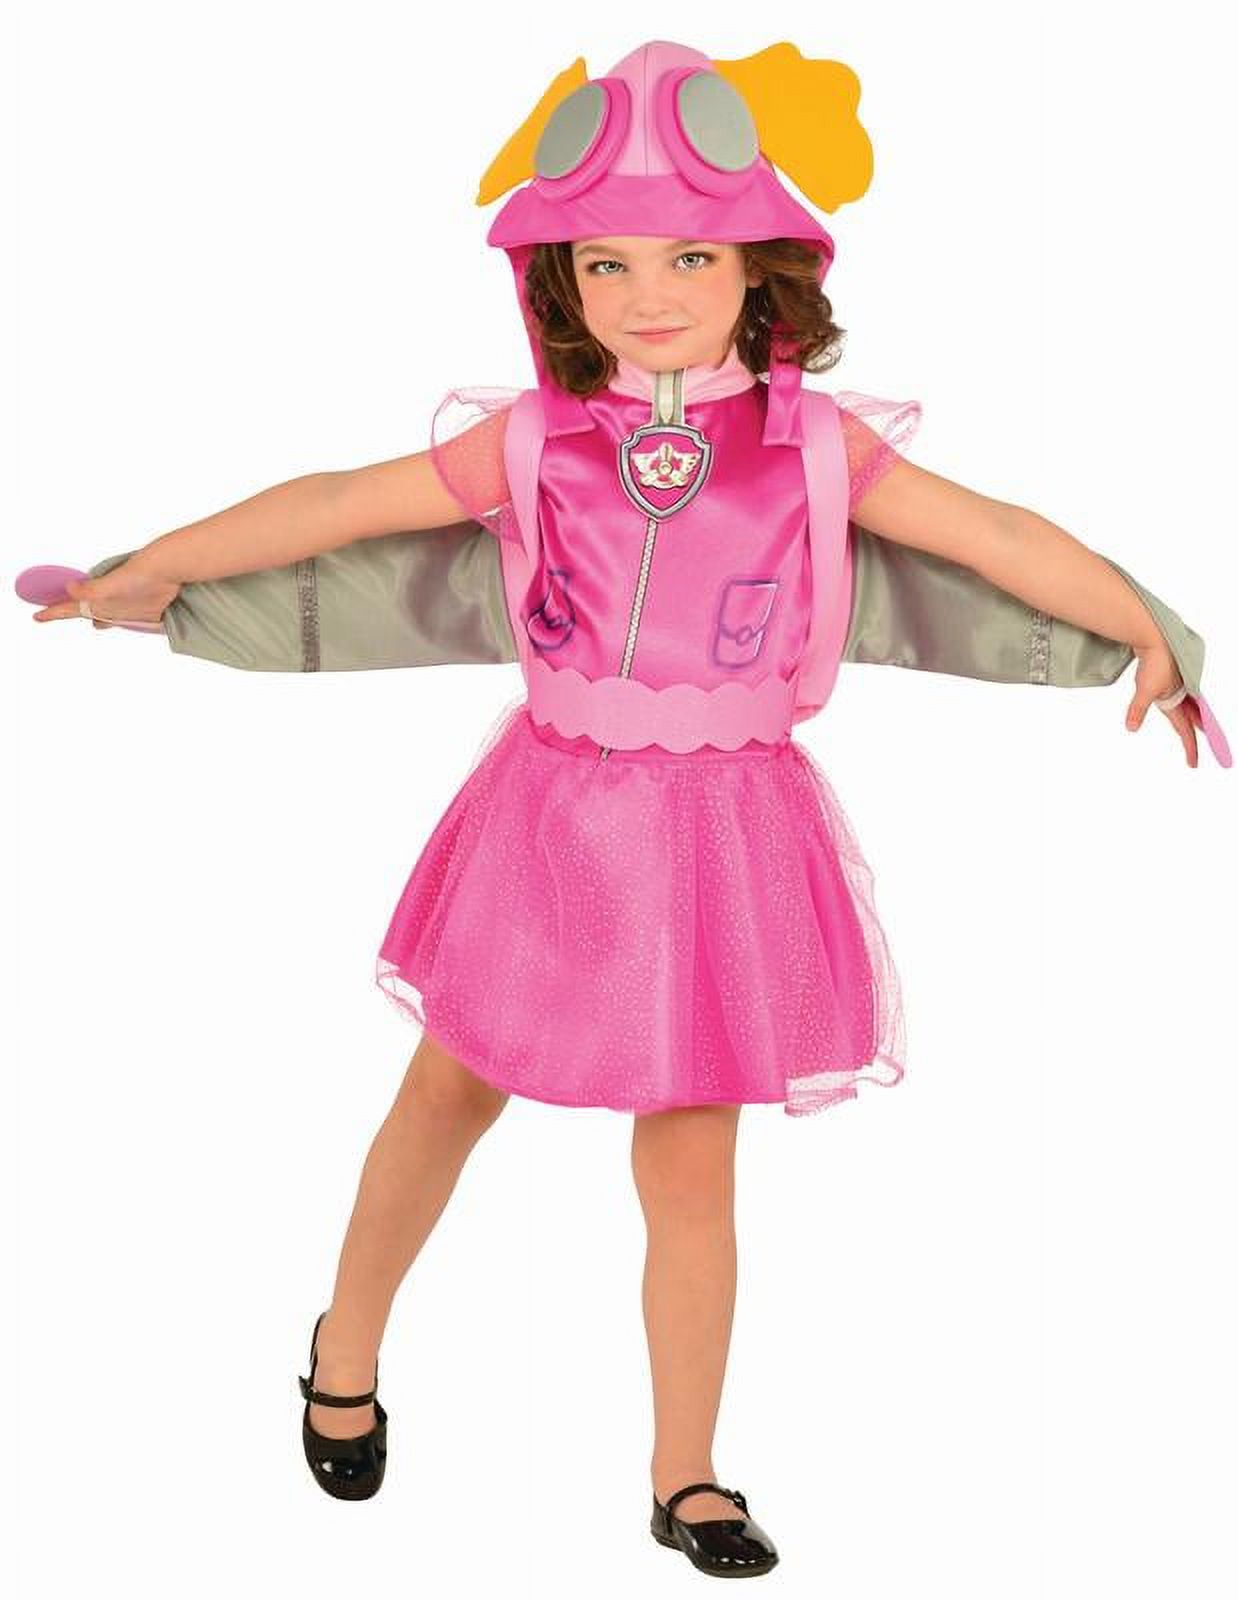 Nickelodeon Skye Paw Patrol Girl's Halloween Fancy-Dress Costume for Toddler, 3T-4T - image 1 of 5